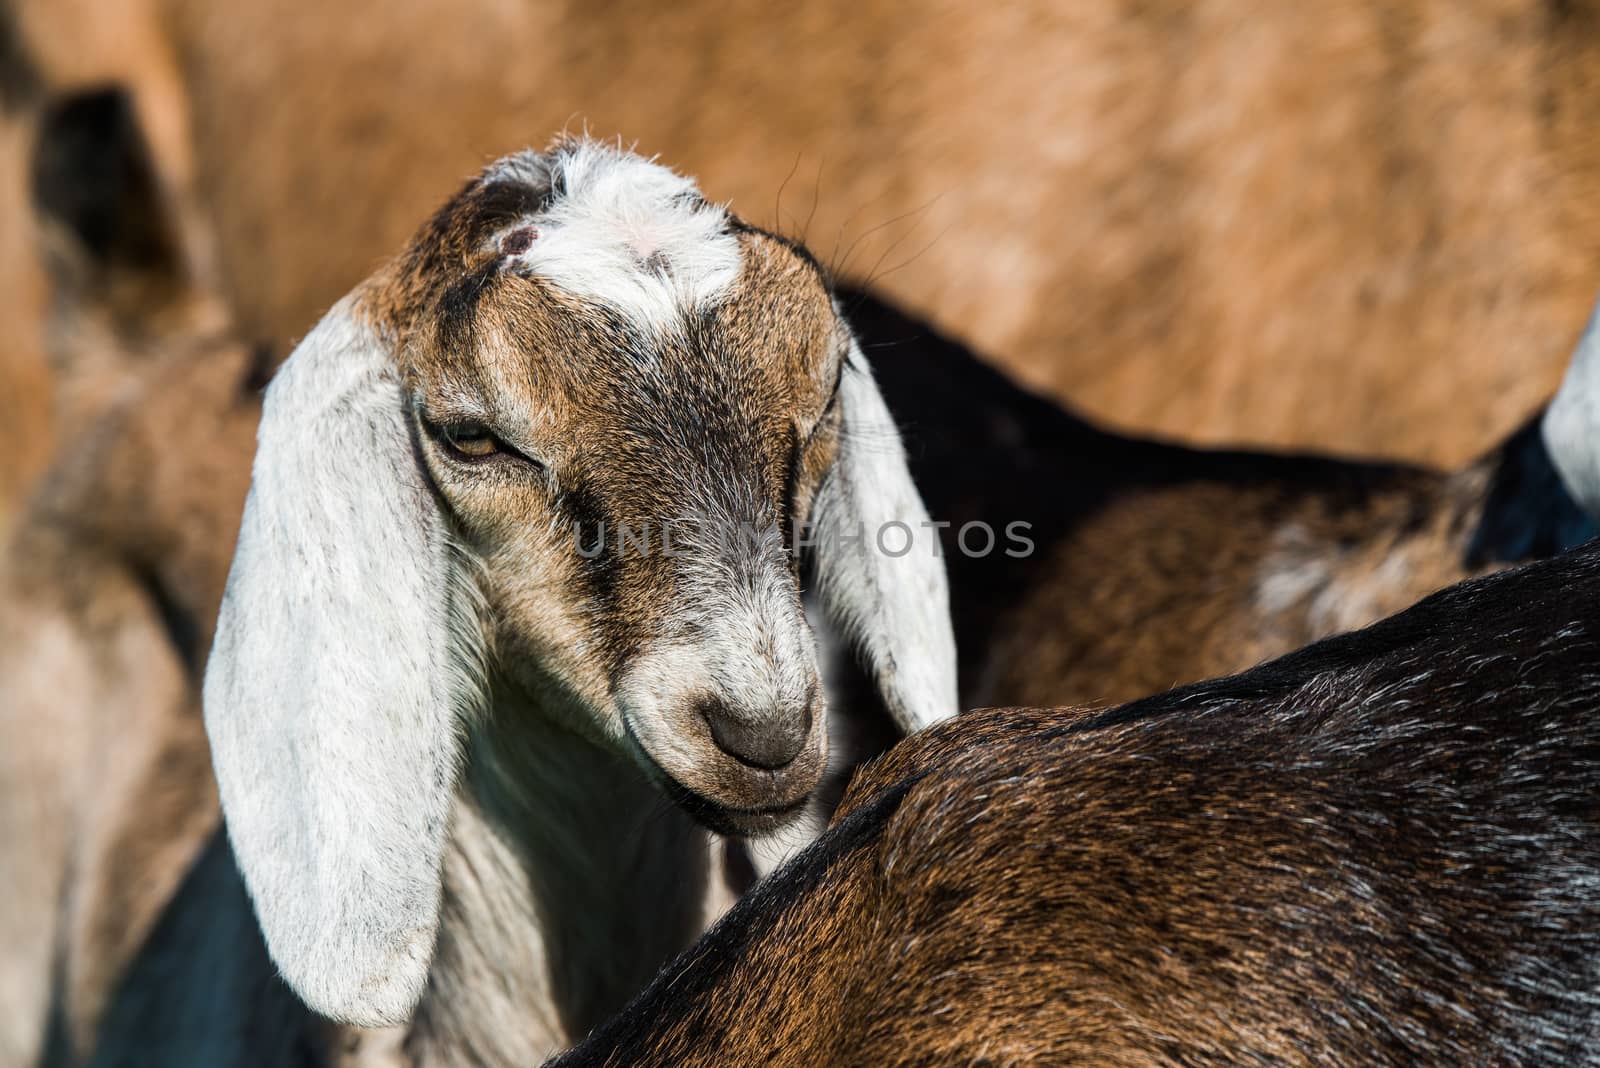 south african boer goat or goatling doeling portrait on nature outdoor